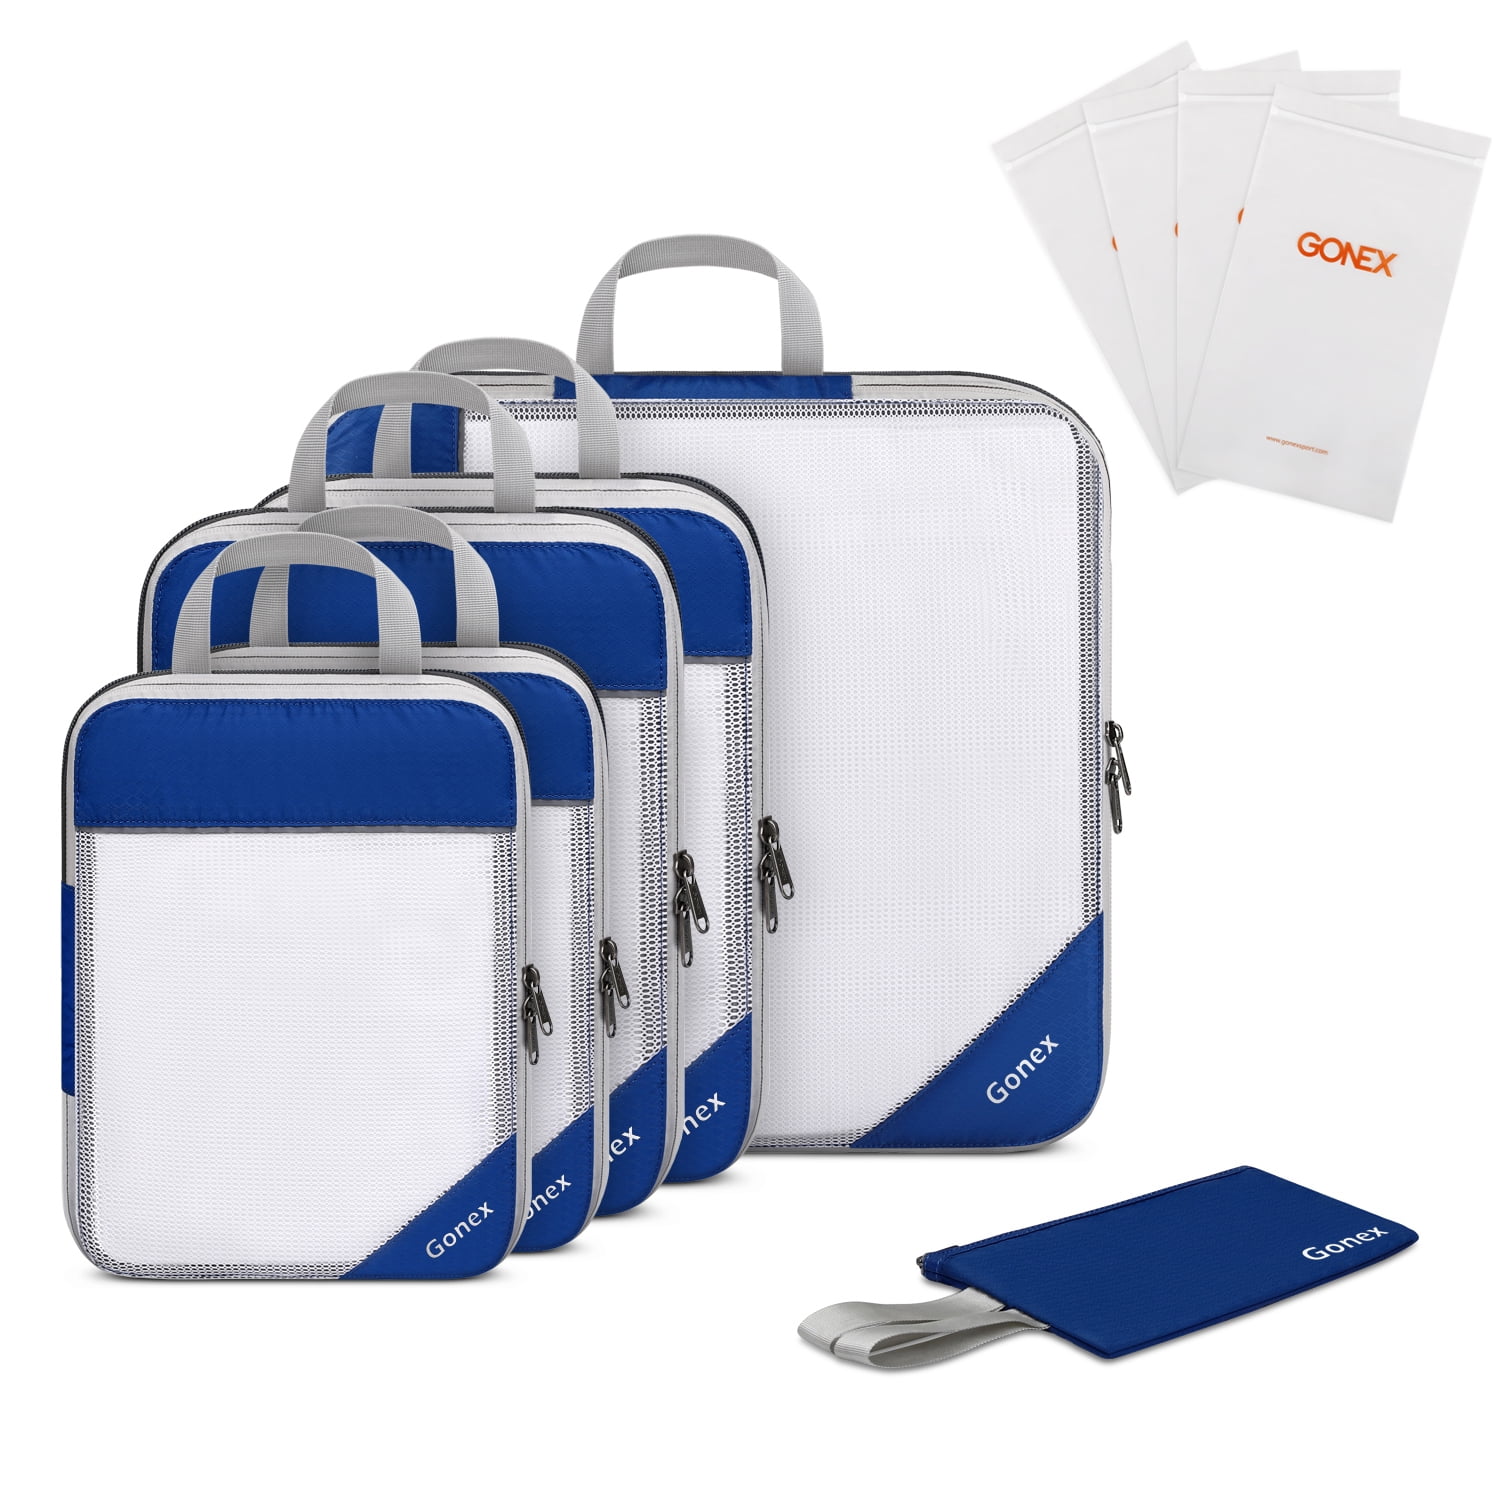 4 Reusable Zip Bags Pink Gonex Packing Cubes,Lightweight Travel Luggage Suitcase Organizers Bags 3pcs Set 